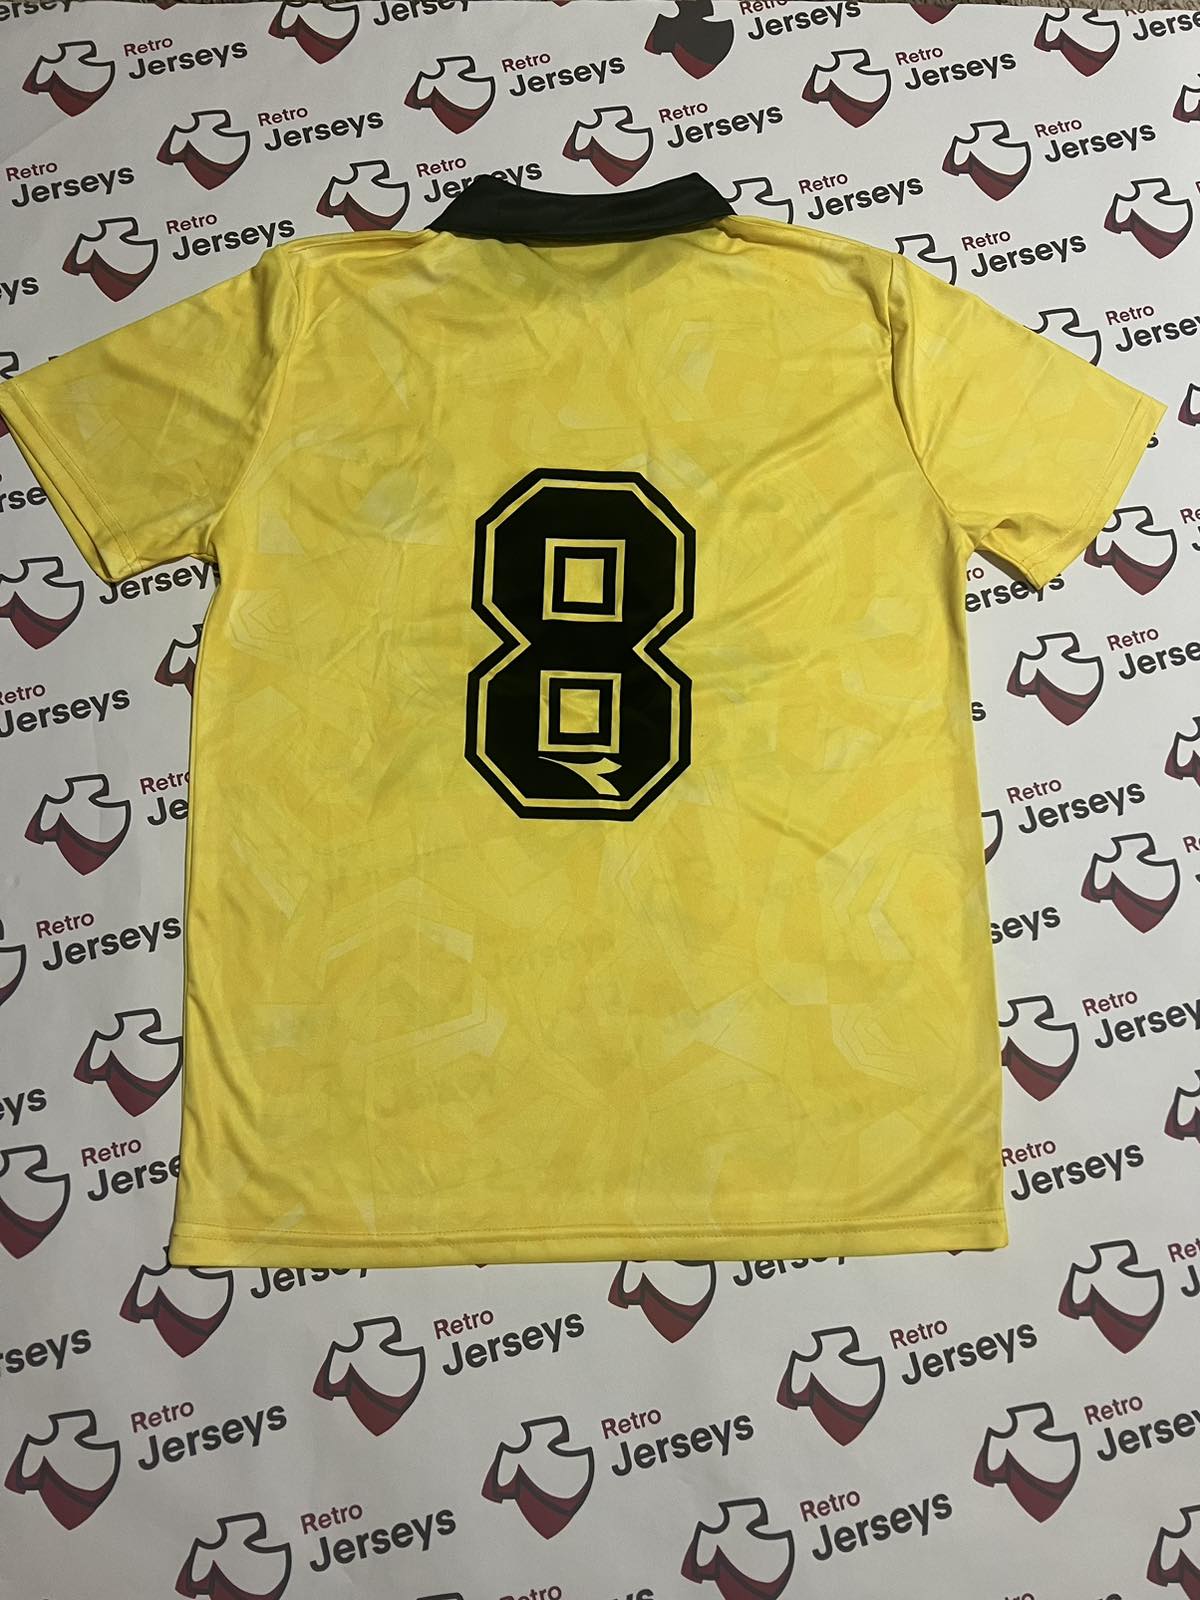 AEK Athens Shirt 1992-1993 Home - Retro Jersey, φανέλα αεκ – Retro Jerseys